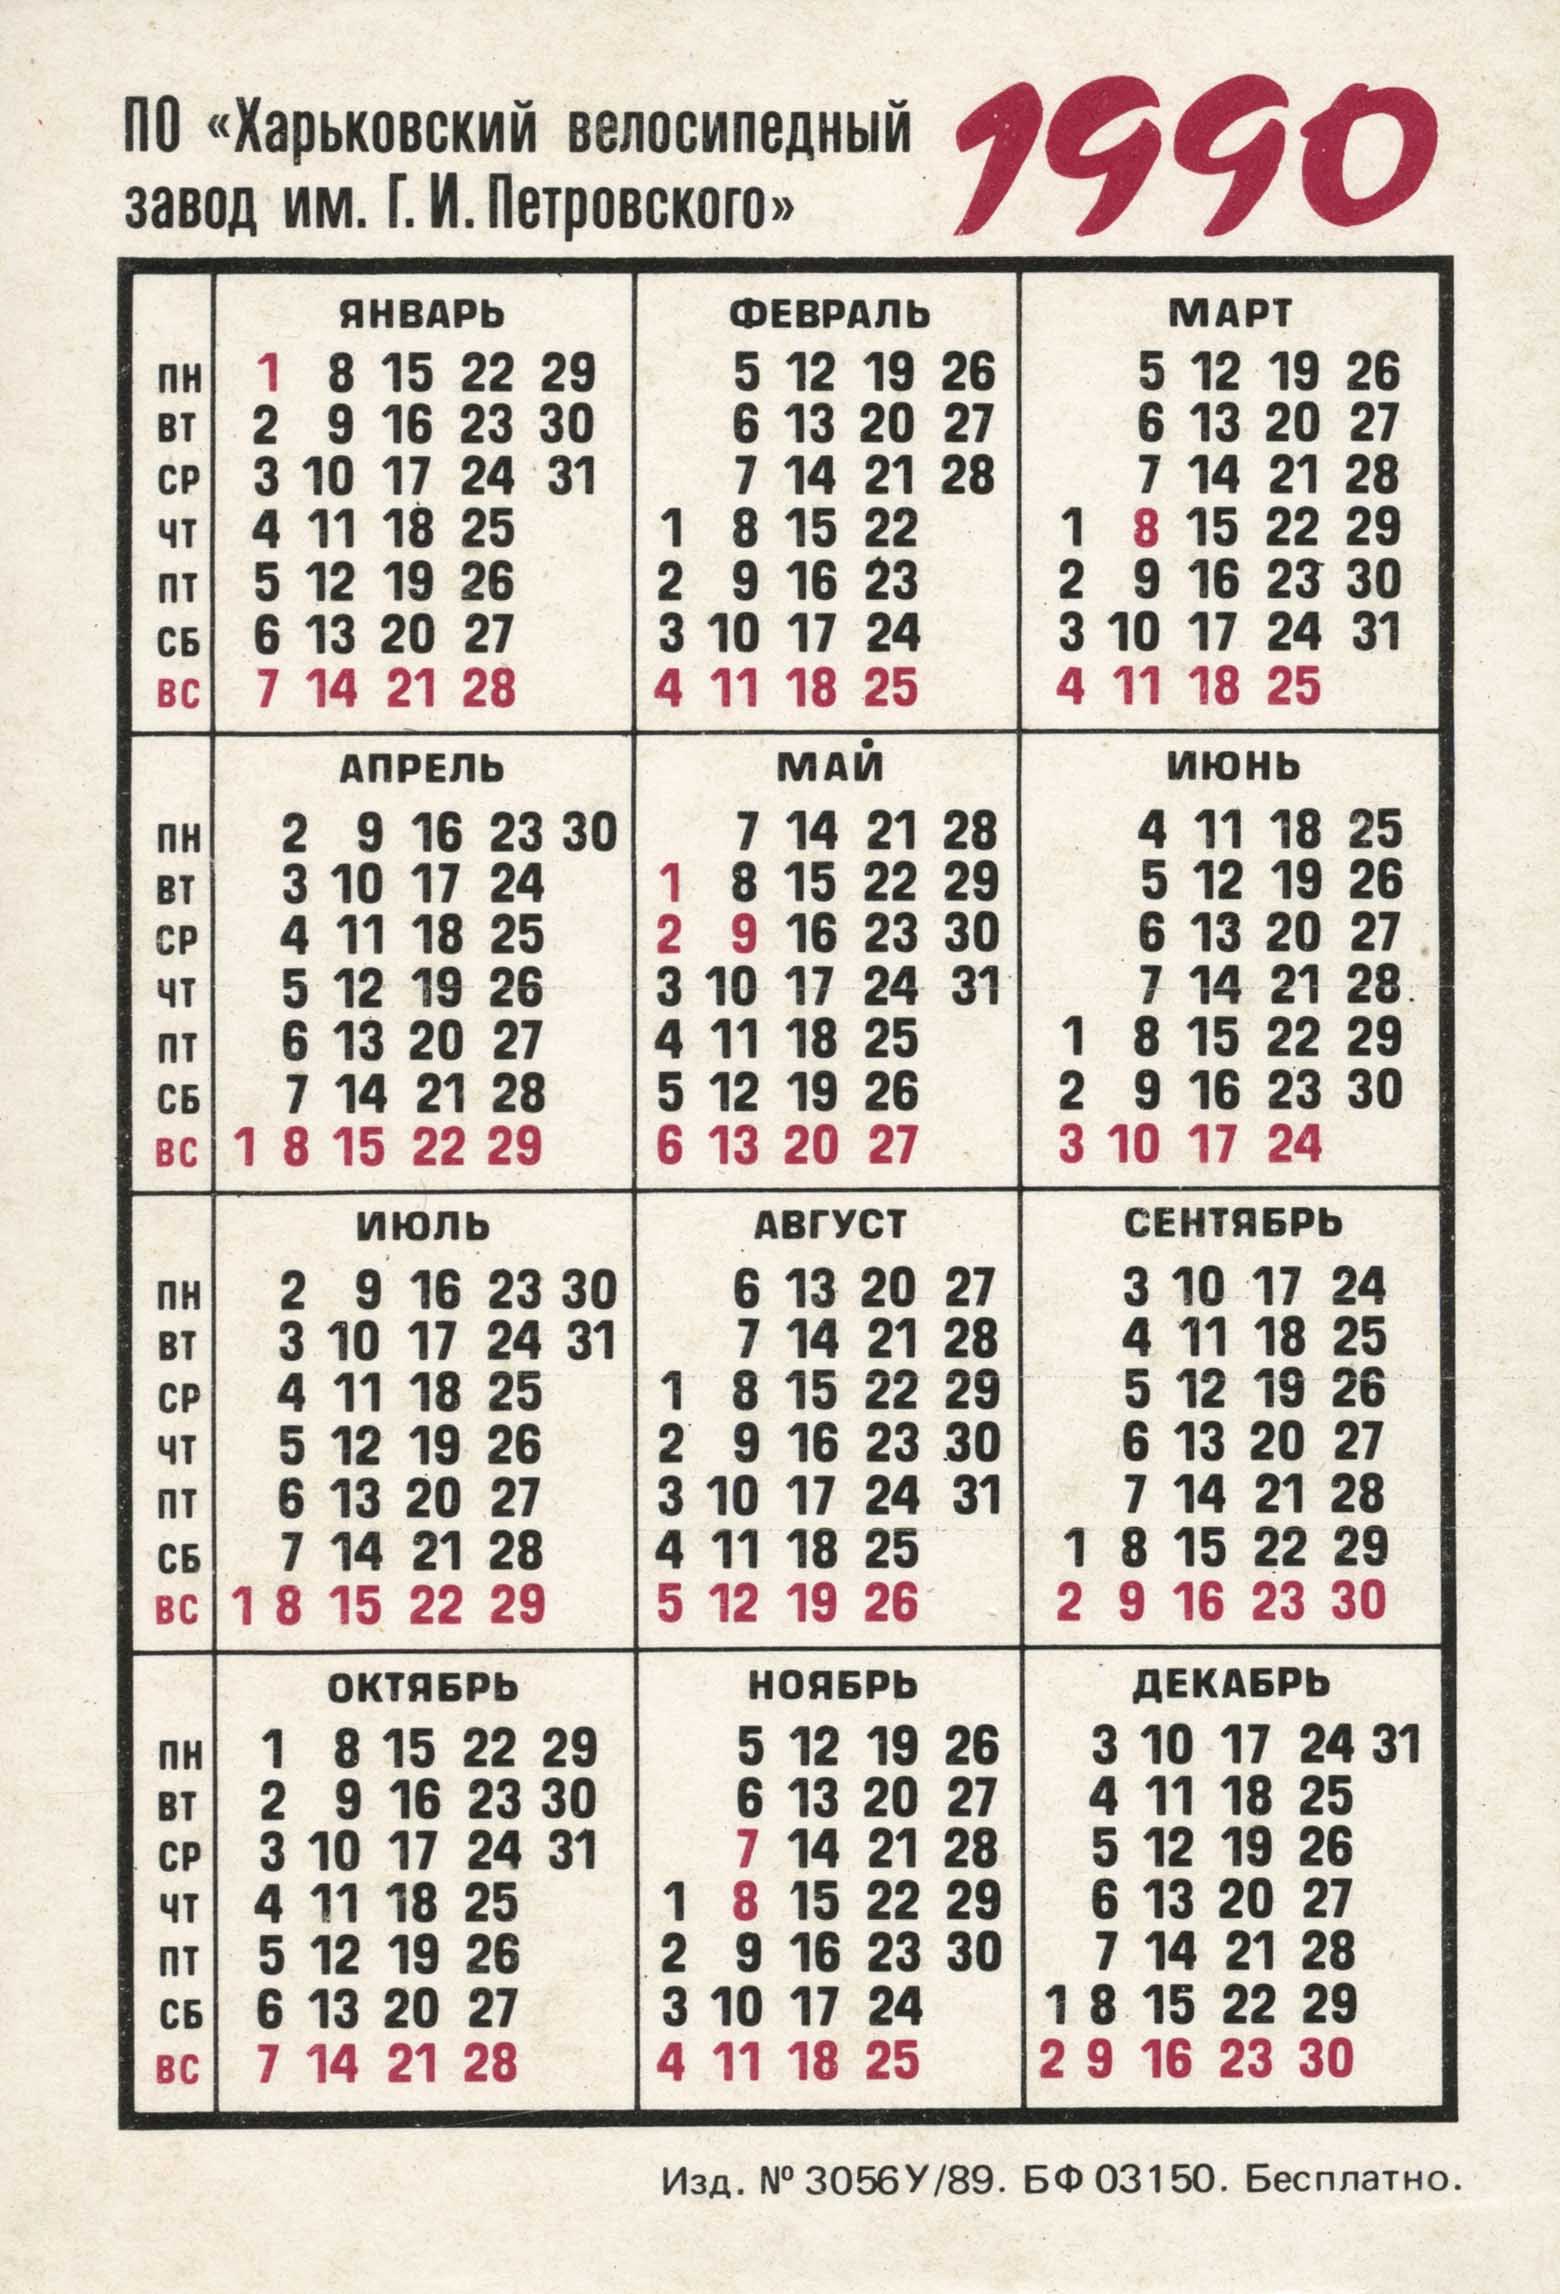 Kharkov calendar 1990 - Ukrainia (111-431) scan 2 main image